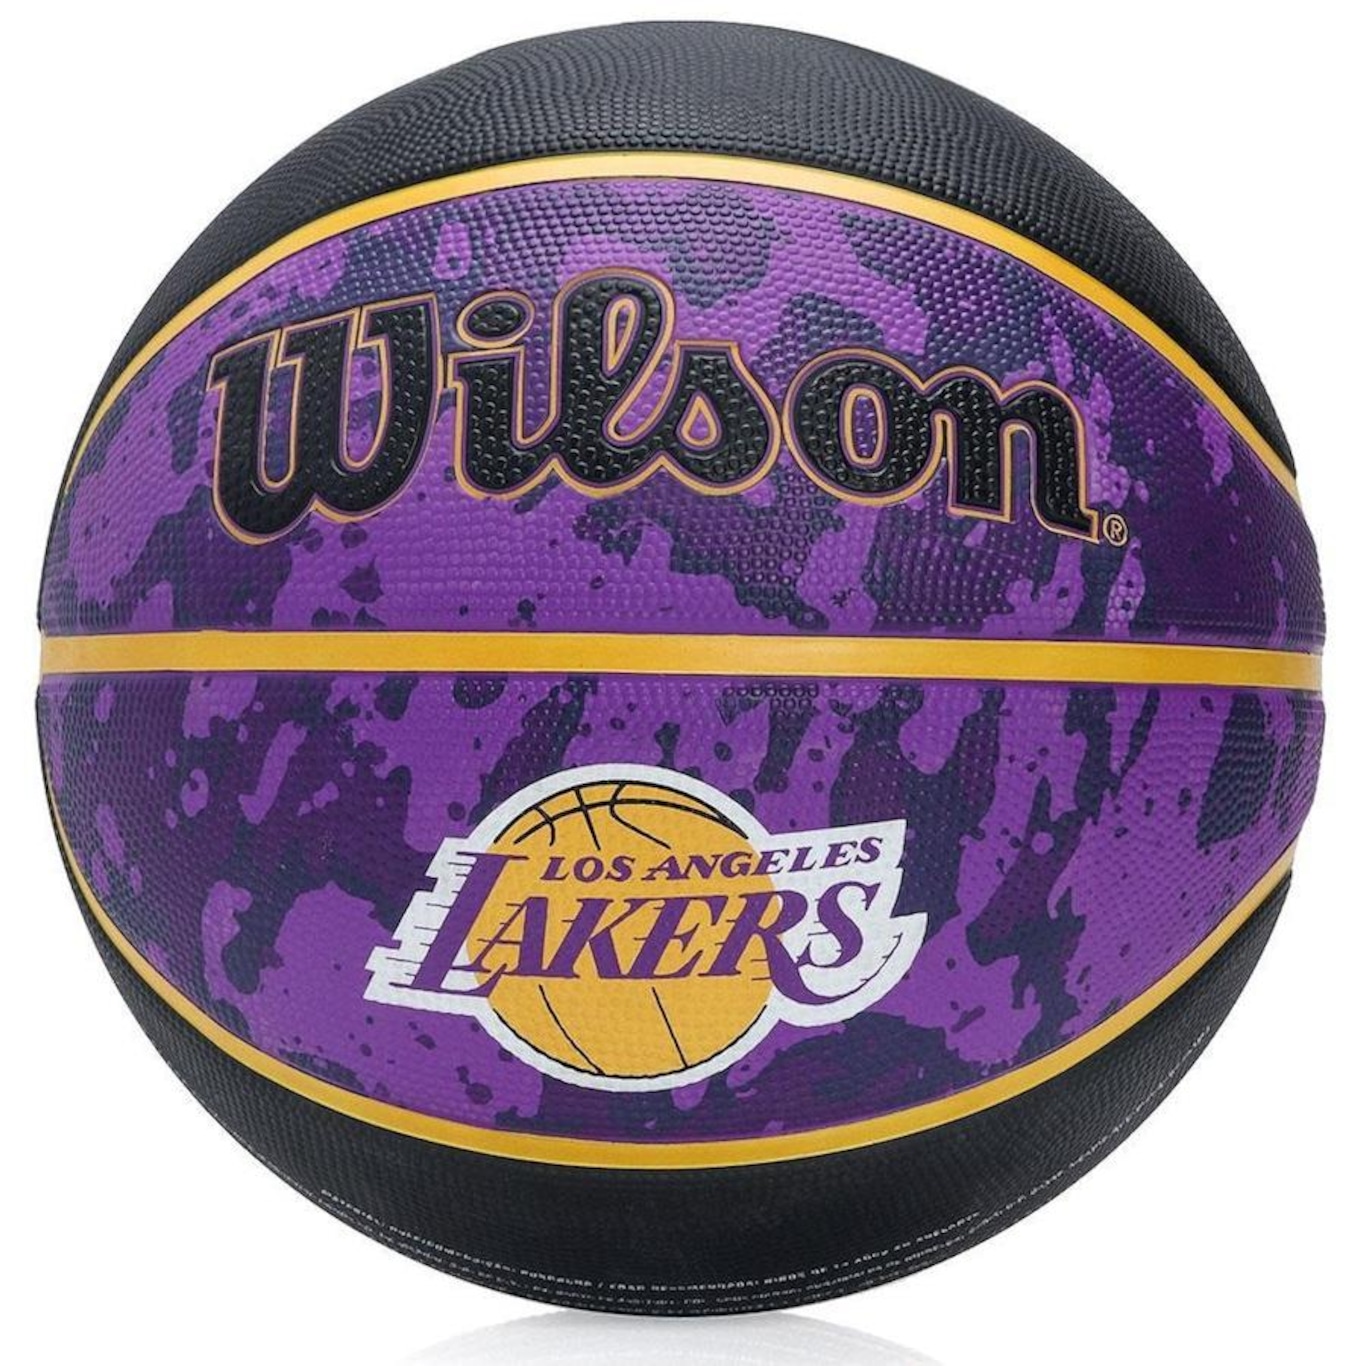 Bola de Basquete NBA Authentic Indoor/Outdoor #7 - Treinit